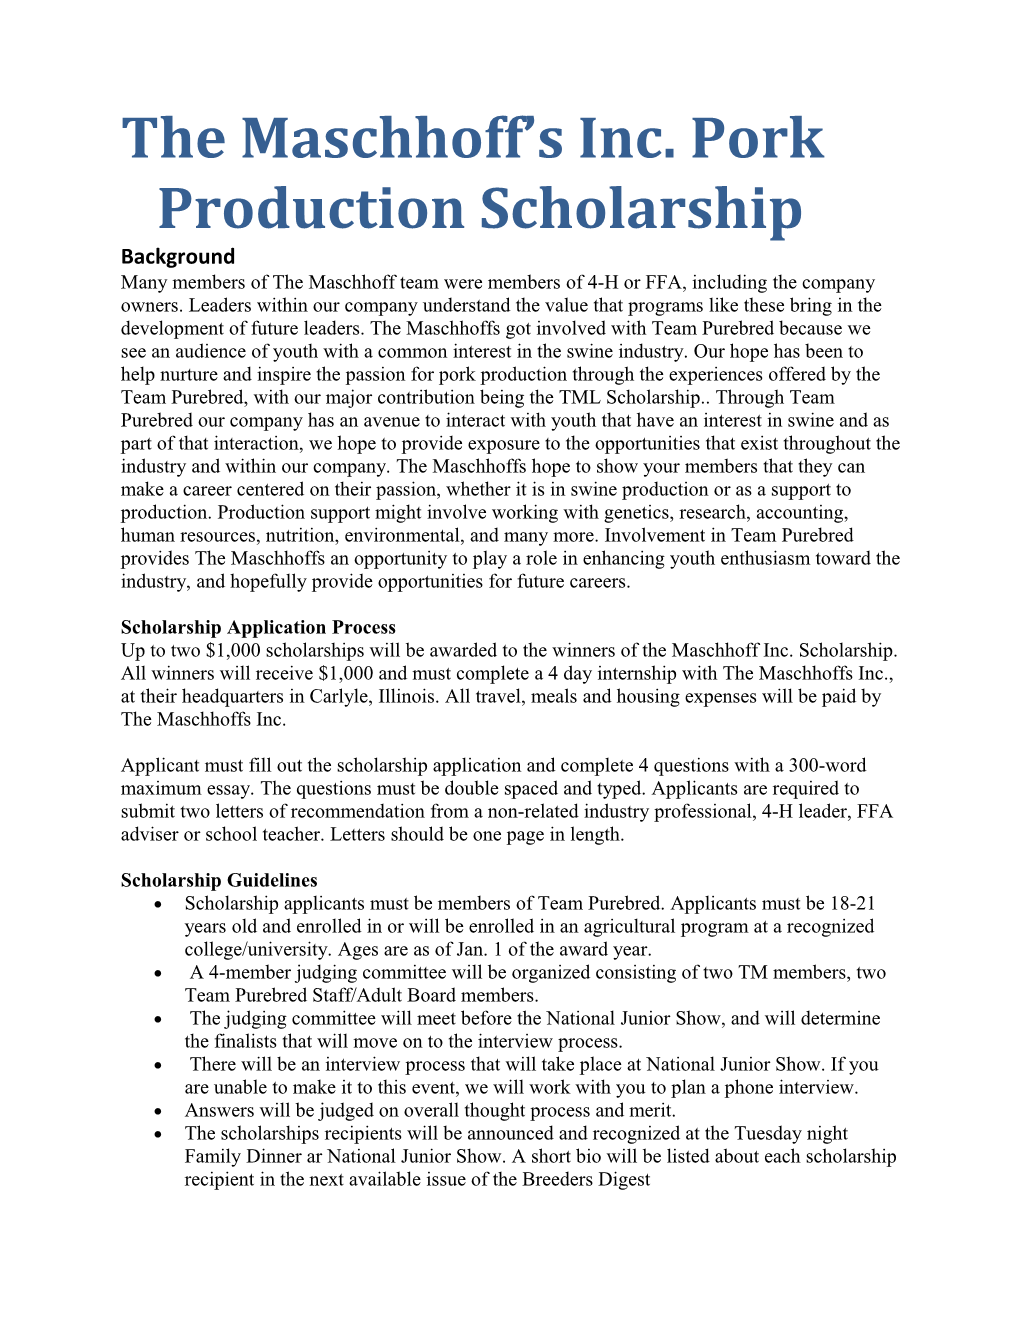 The Maschhoff S Inc. Pork Production Scholarship